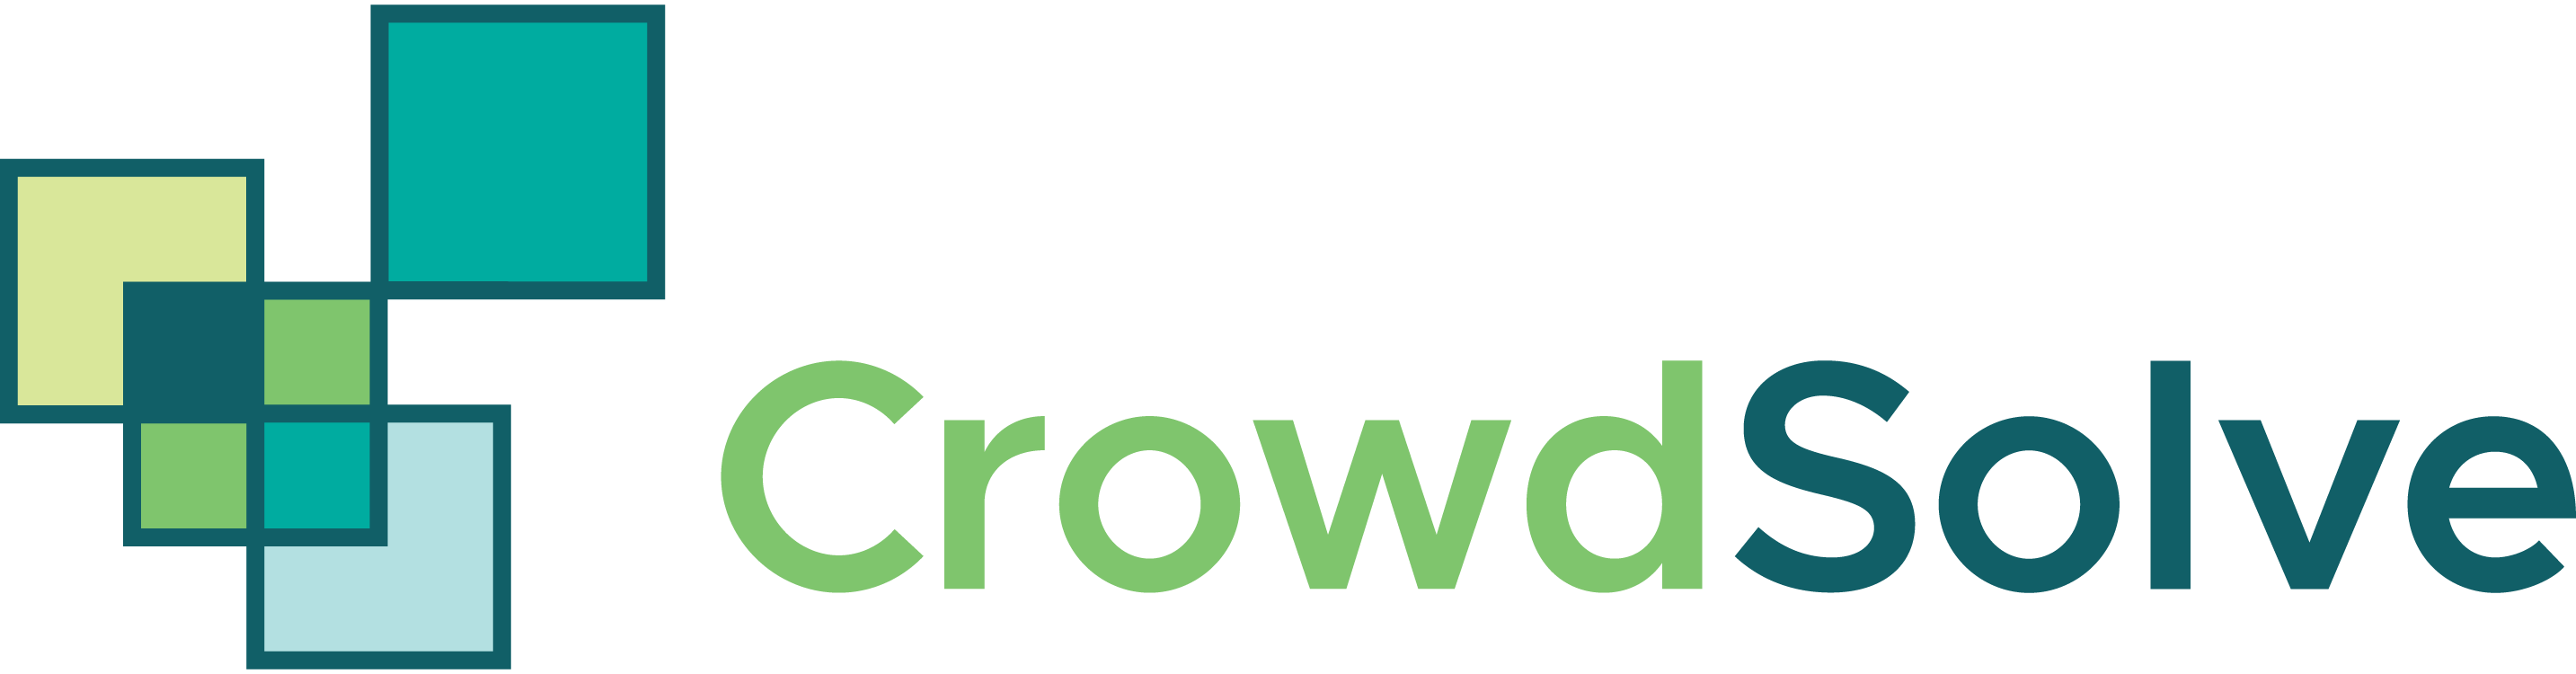 Crowdsolve logo